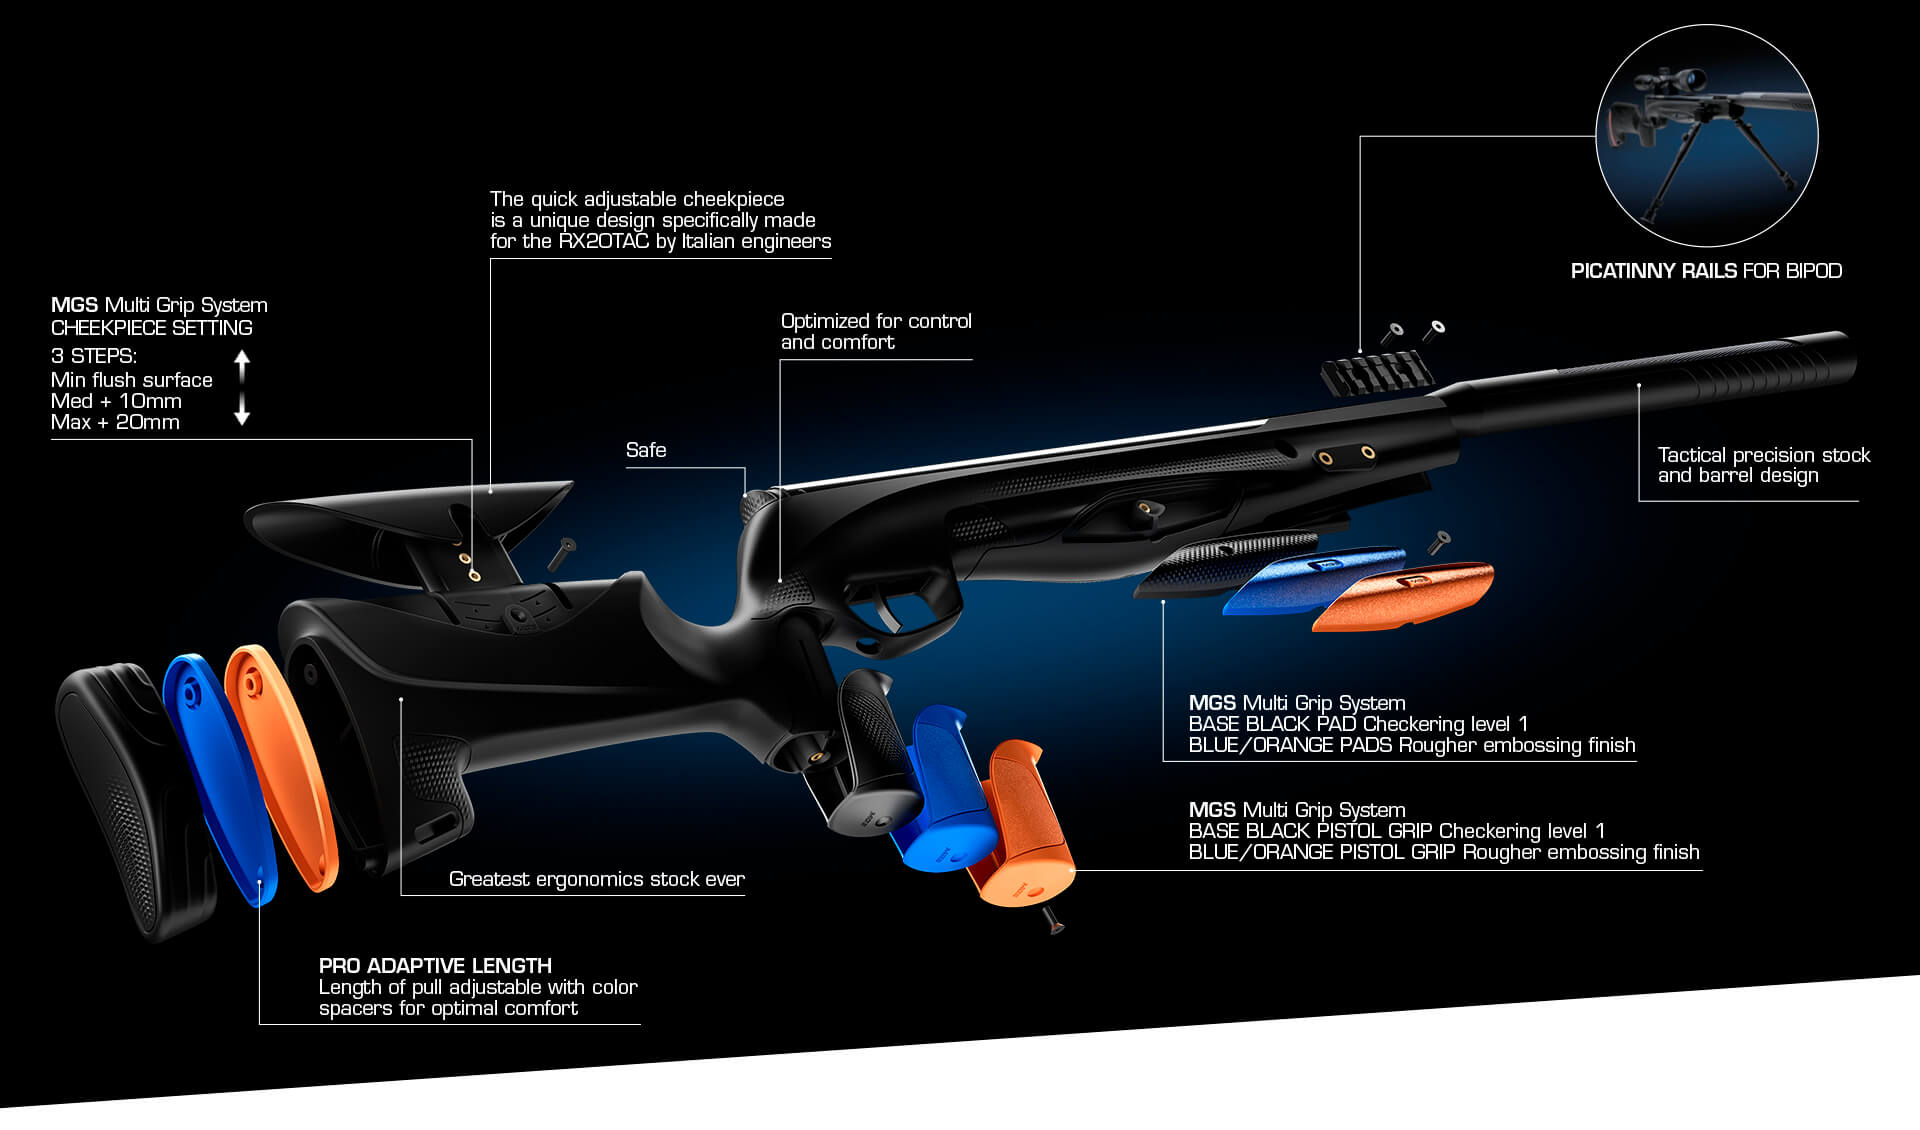 RX20 TAC S2 Suppressor Carbine with Silencer 